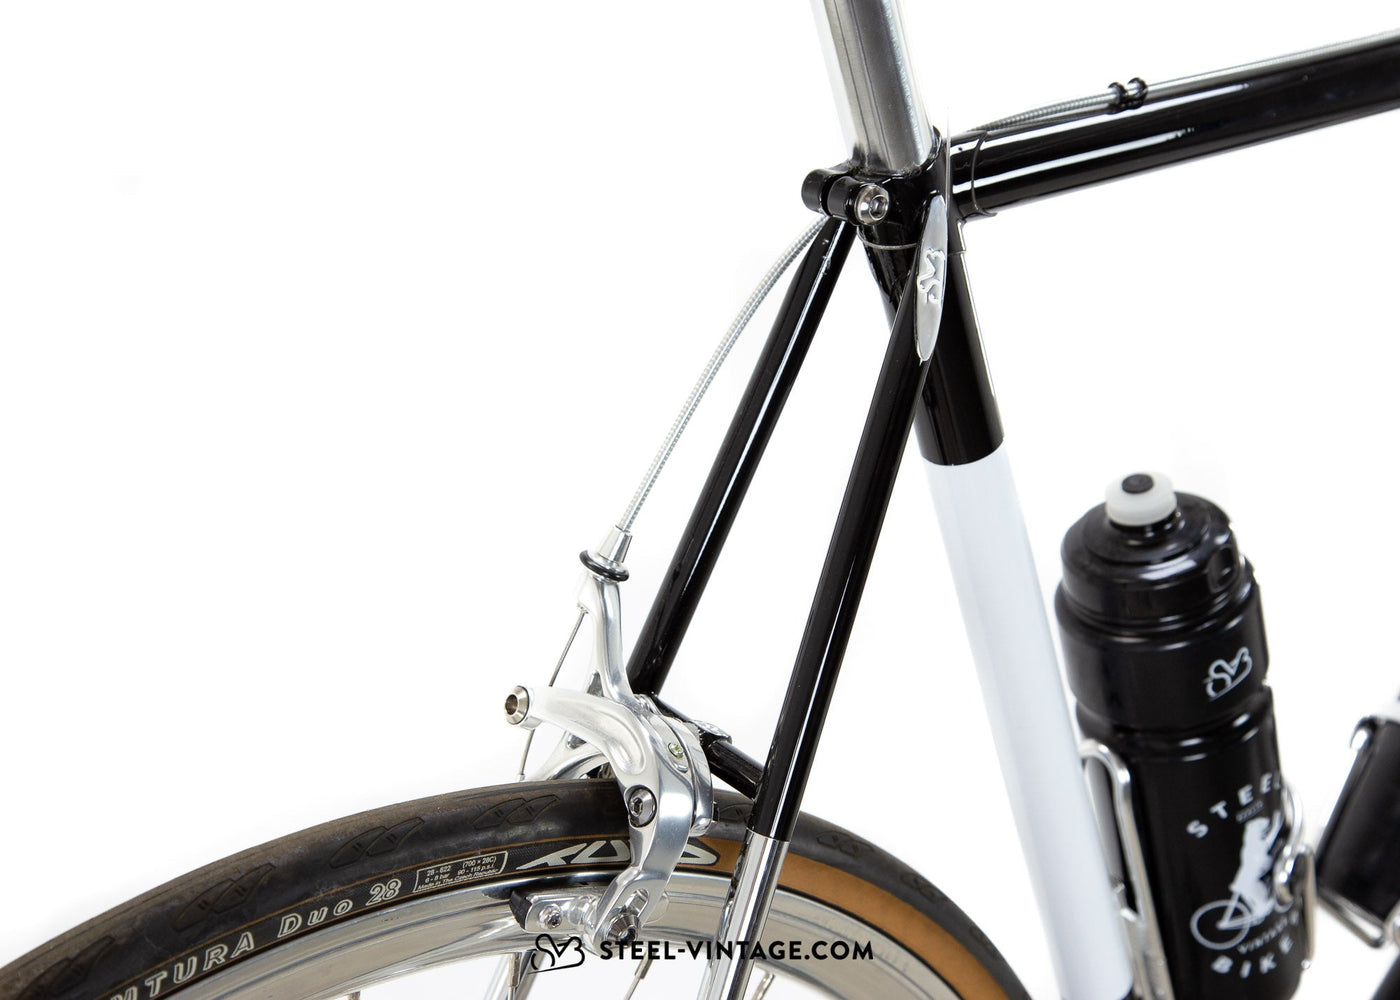 New Limited Edition Steel Vintage Road Bicycle for Eroica - Steel Vintage Bikes